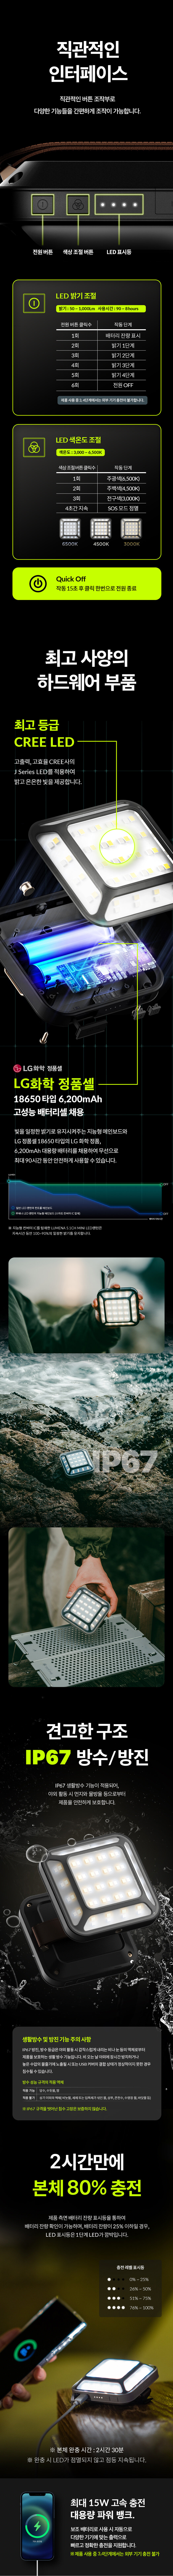 Lumena 5.1CH Mini 迷你行動電源照明LED燈 (現代黑色)